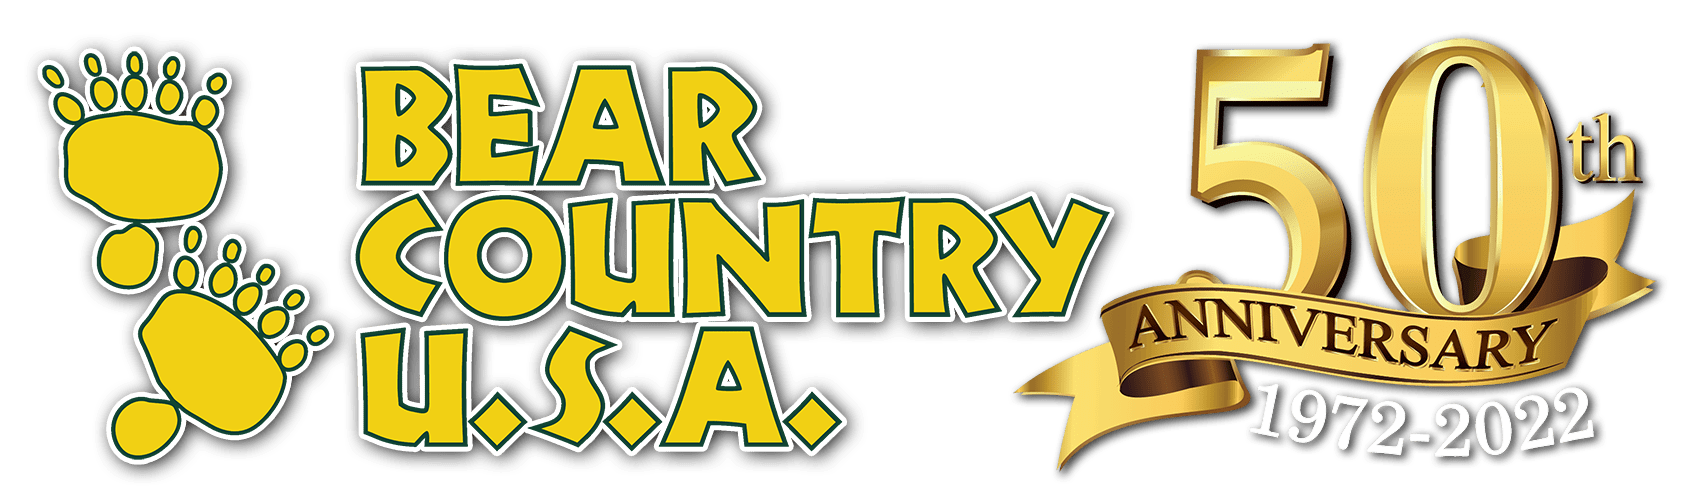 Bear country USA 50th Anniversary Logo 1